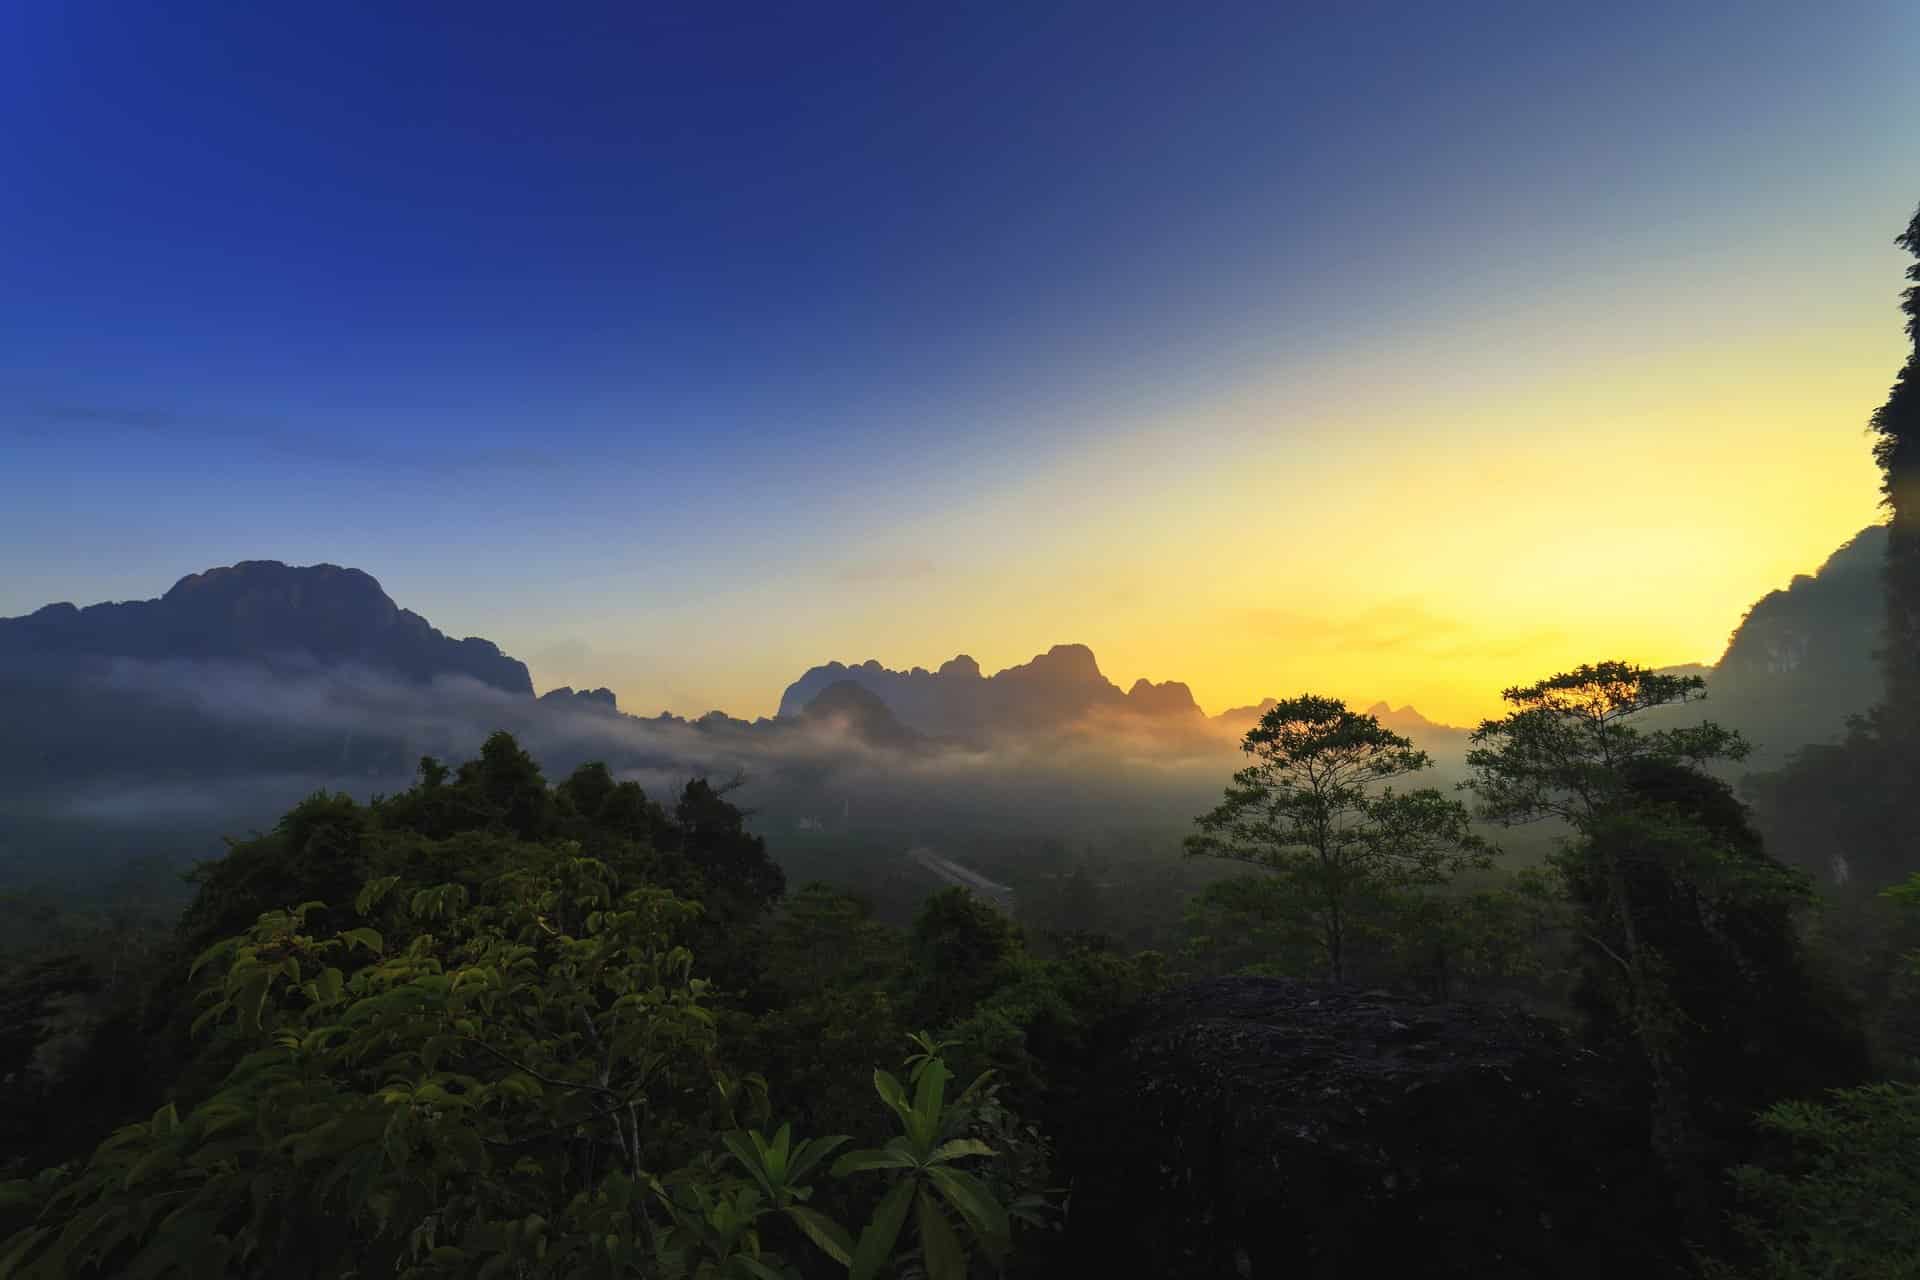 Sunrise over the rainforest in Khao Sok National Park, Thailand.